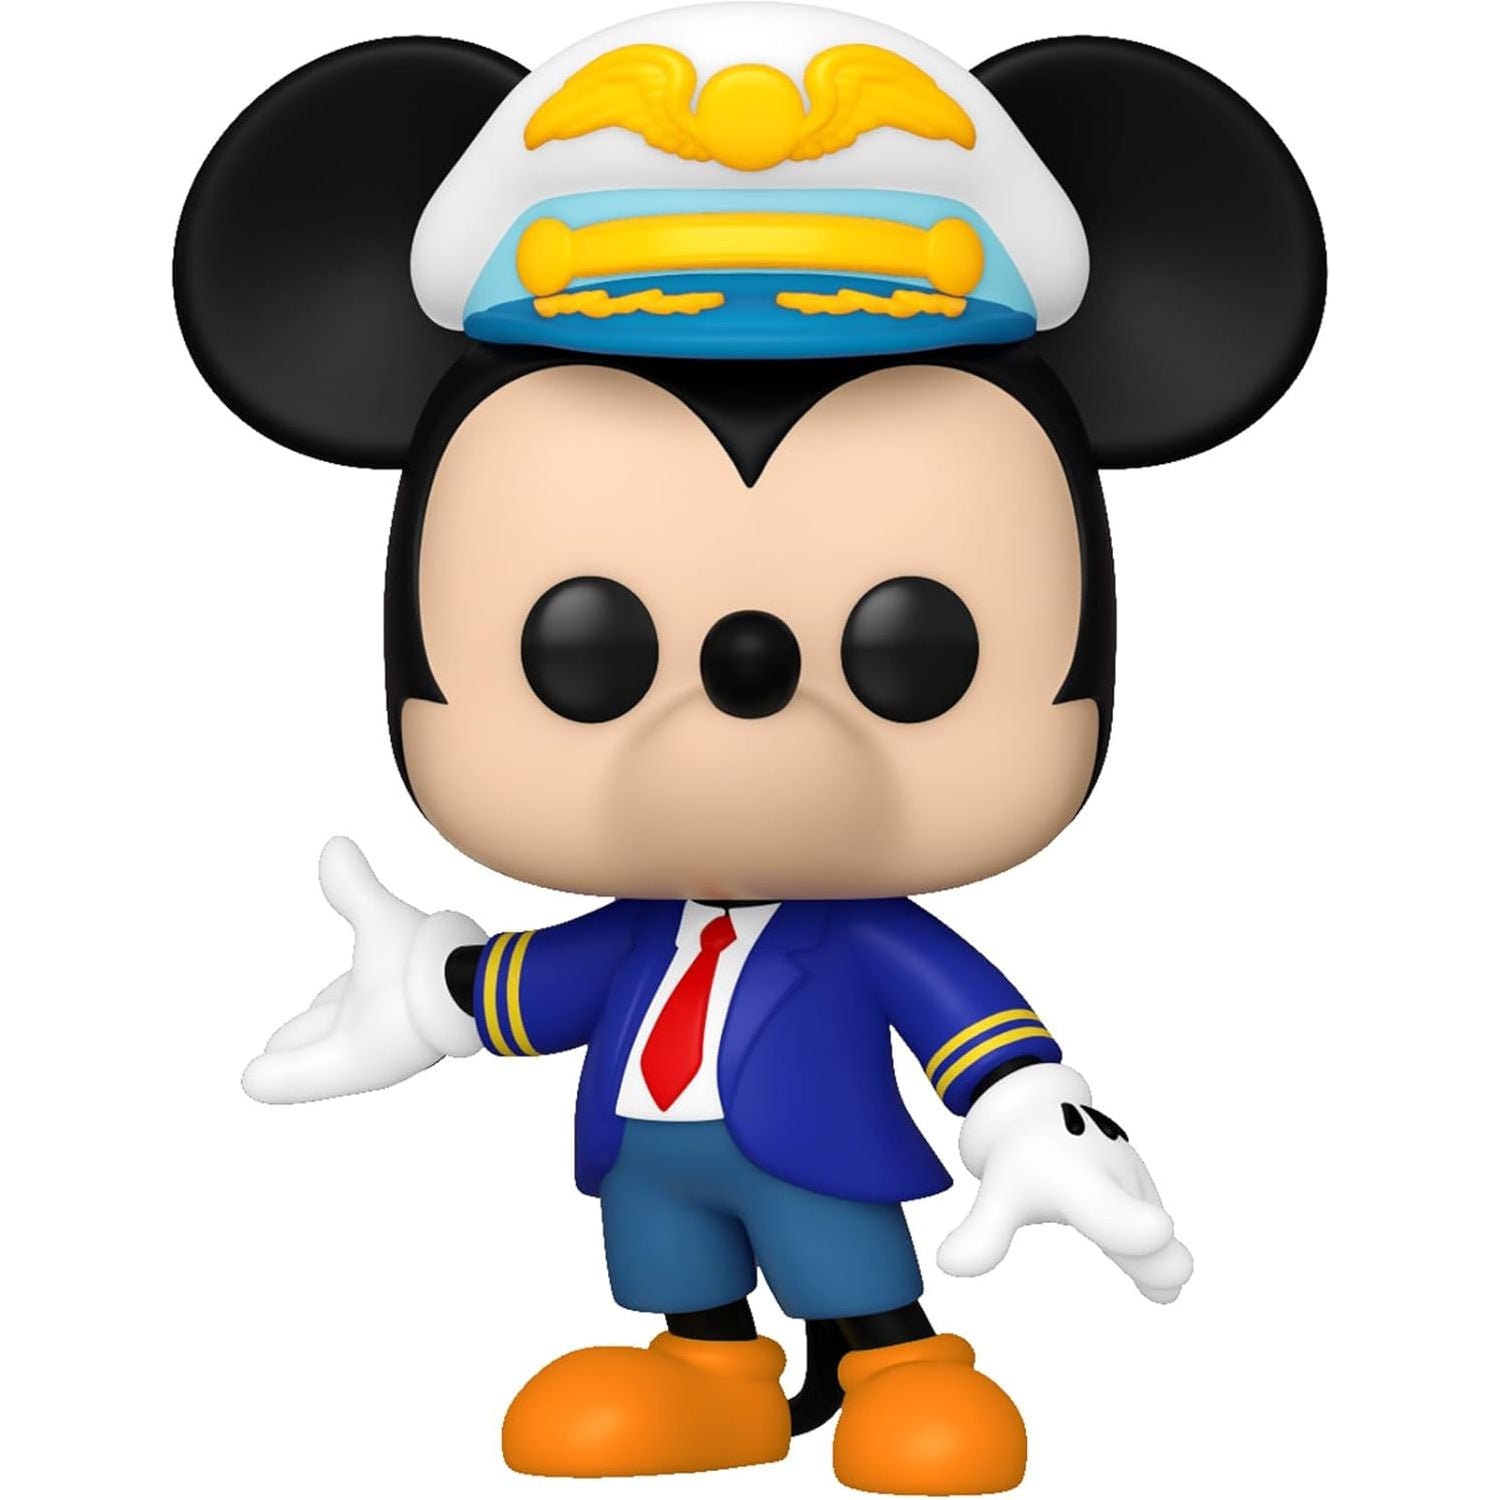 Funko Pop Disney Mickey Mouse One Walt’s Plane - Pilot Mickey Mouse